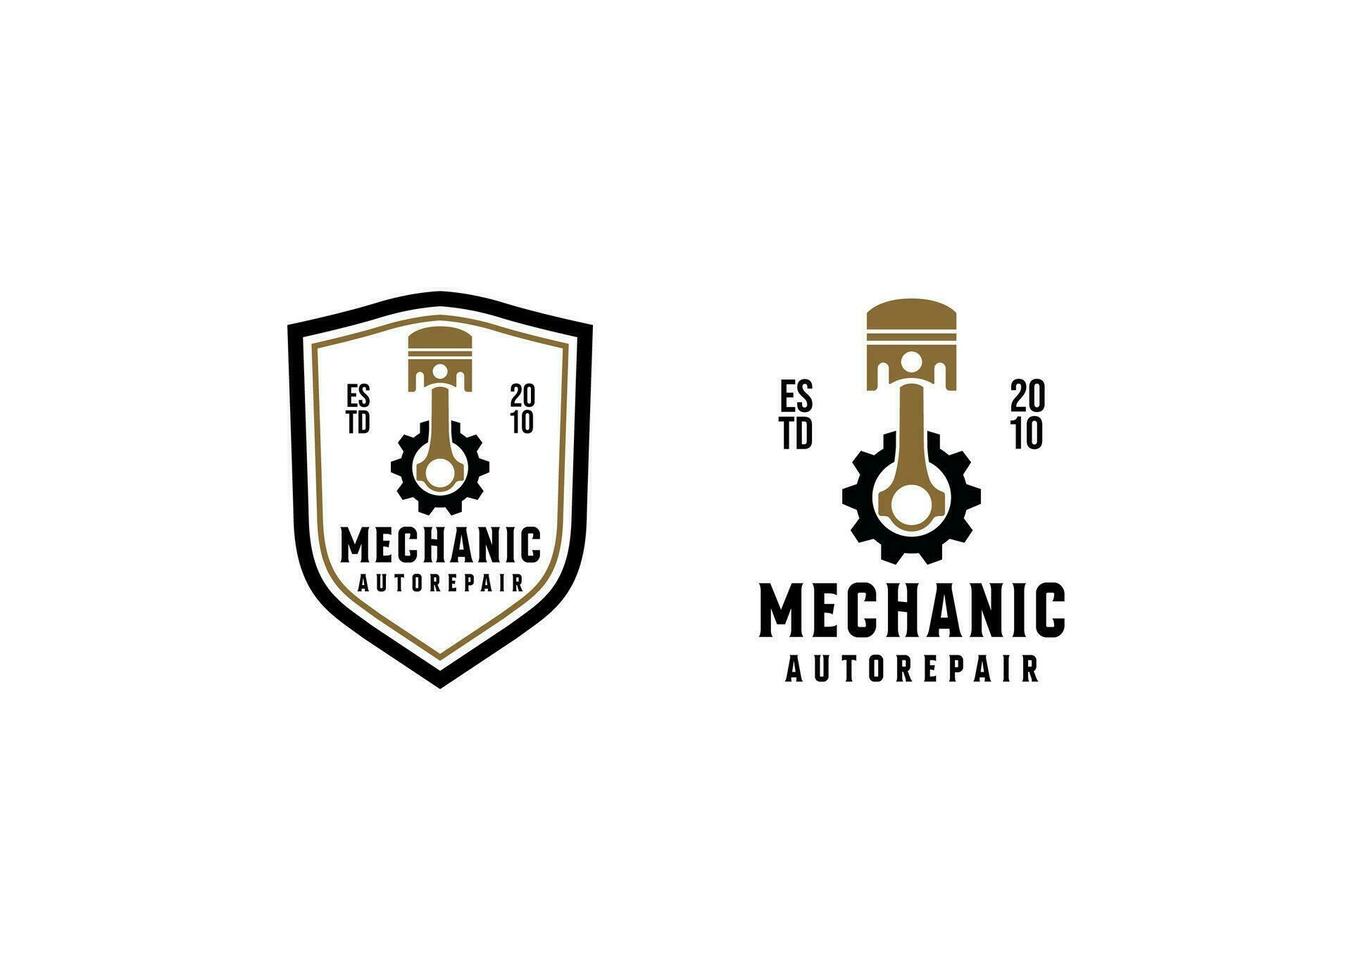 Automotive mechanic logo design. Mechanic services, auto repair logo. design template, vector illustration.